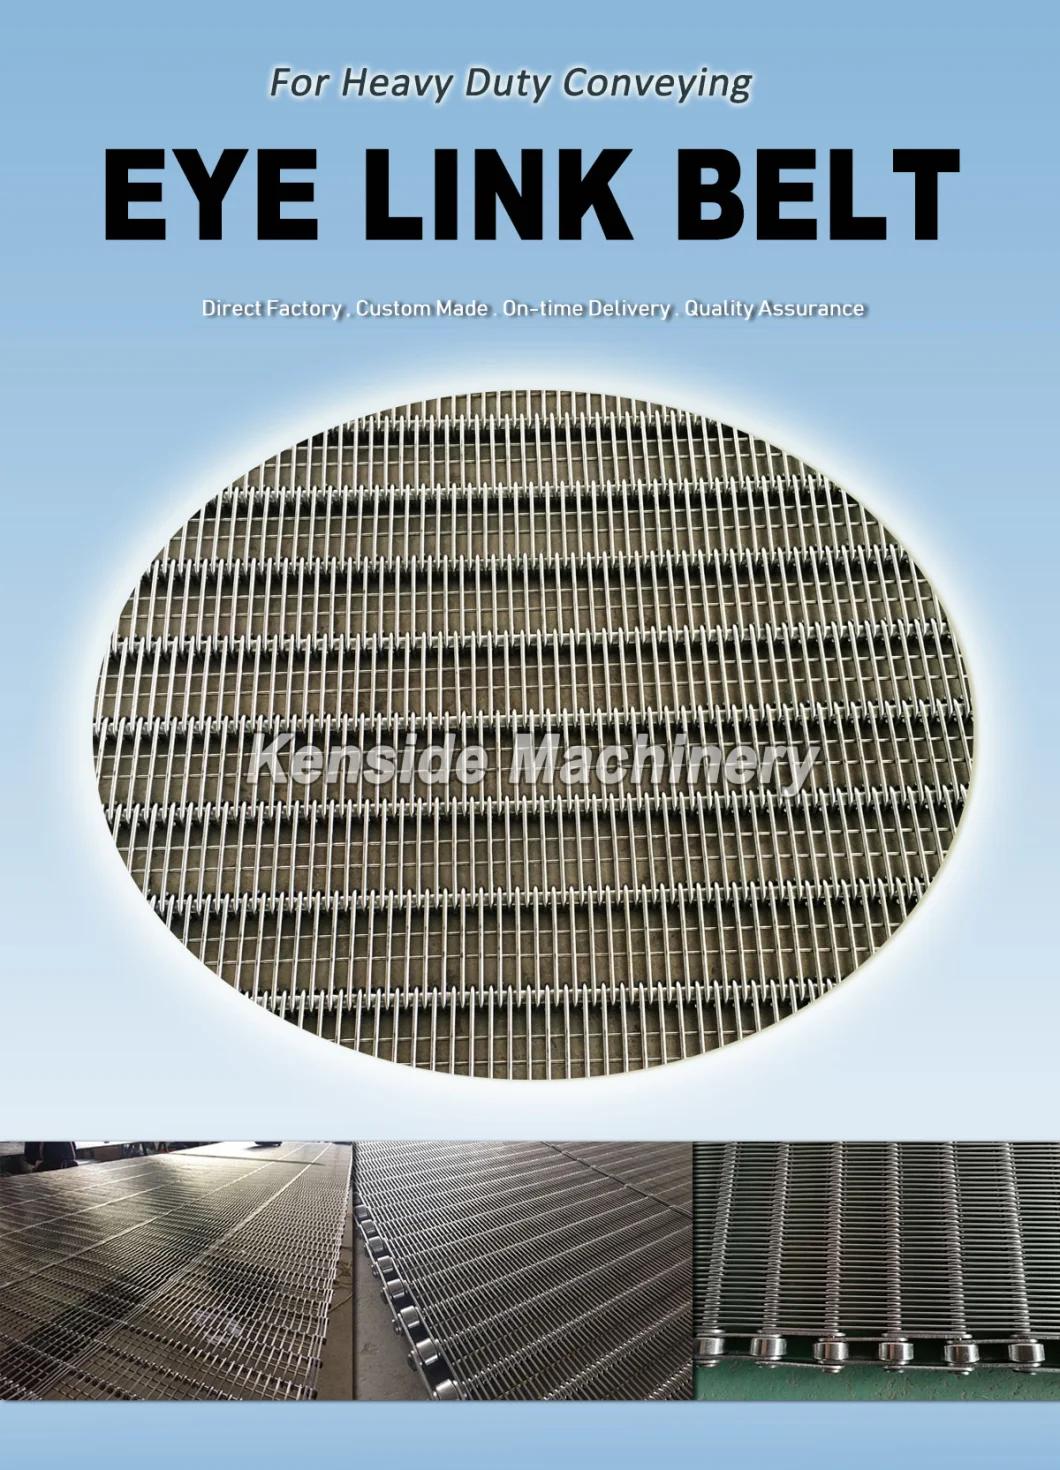 Eyelink Belt Conveying for Food Industry